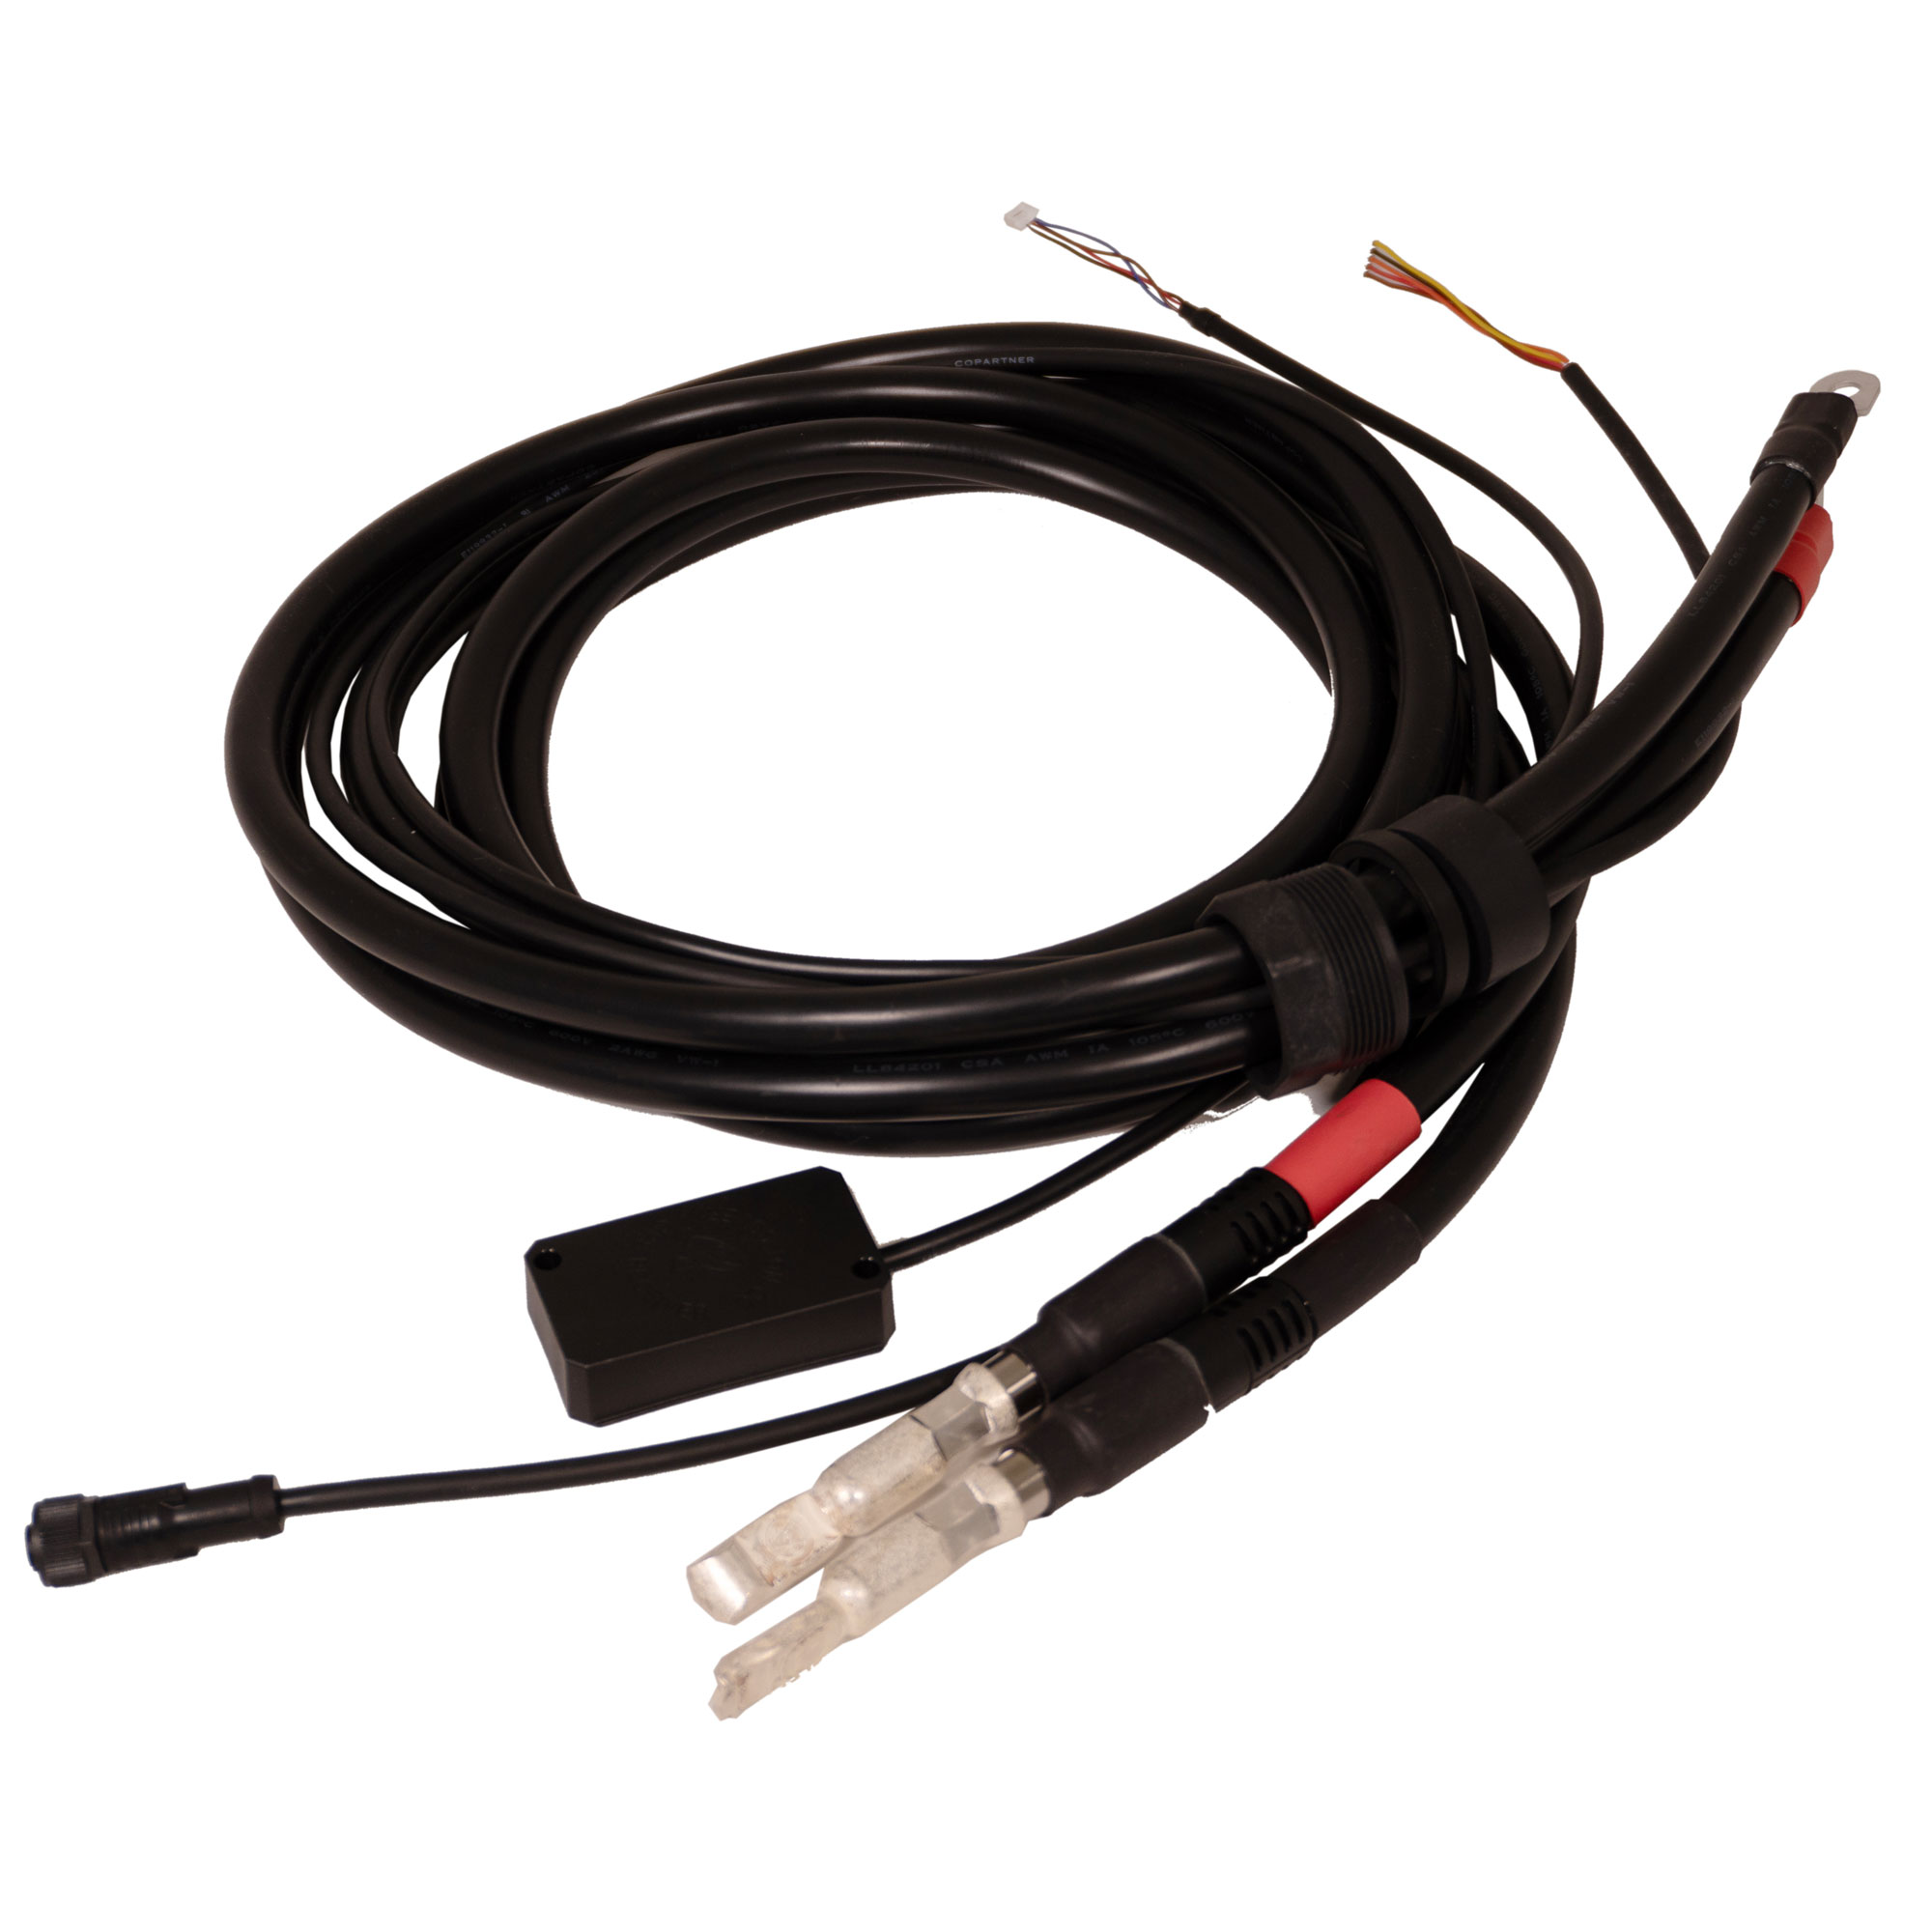 Tq systems 3392880101 cable de connexion inverse hpr sc re01 cab03 v0